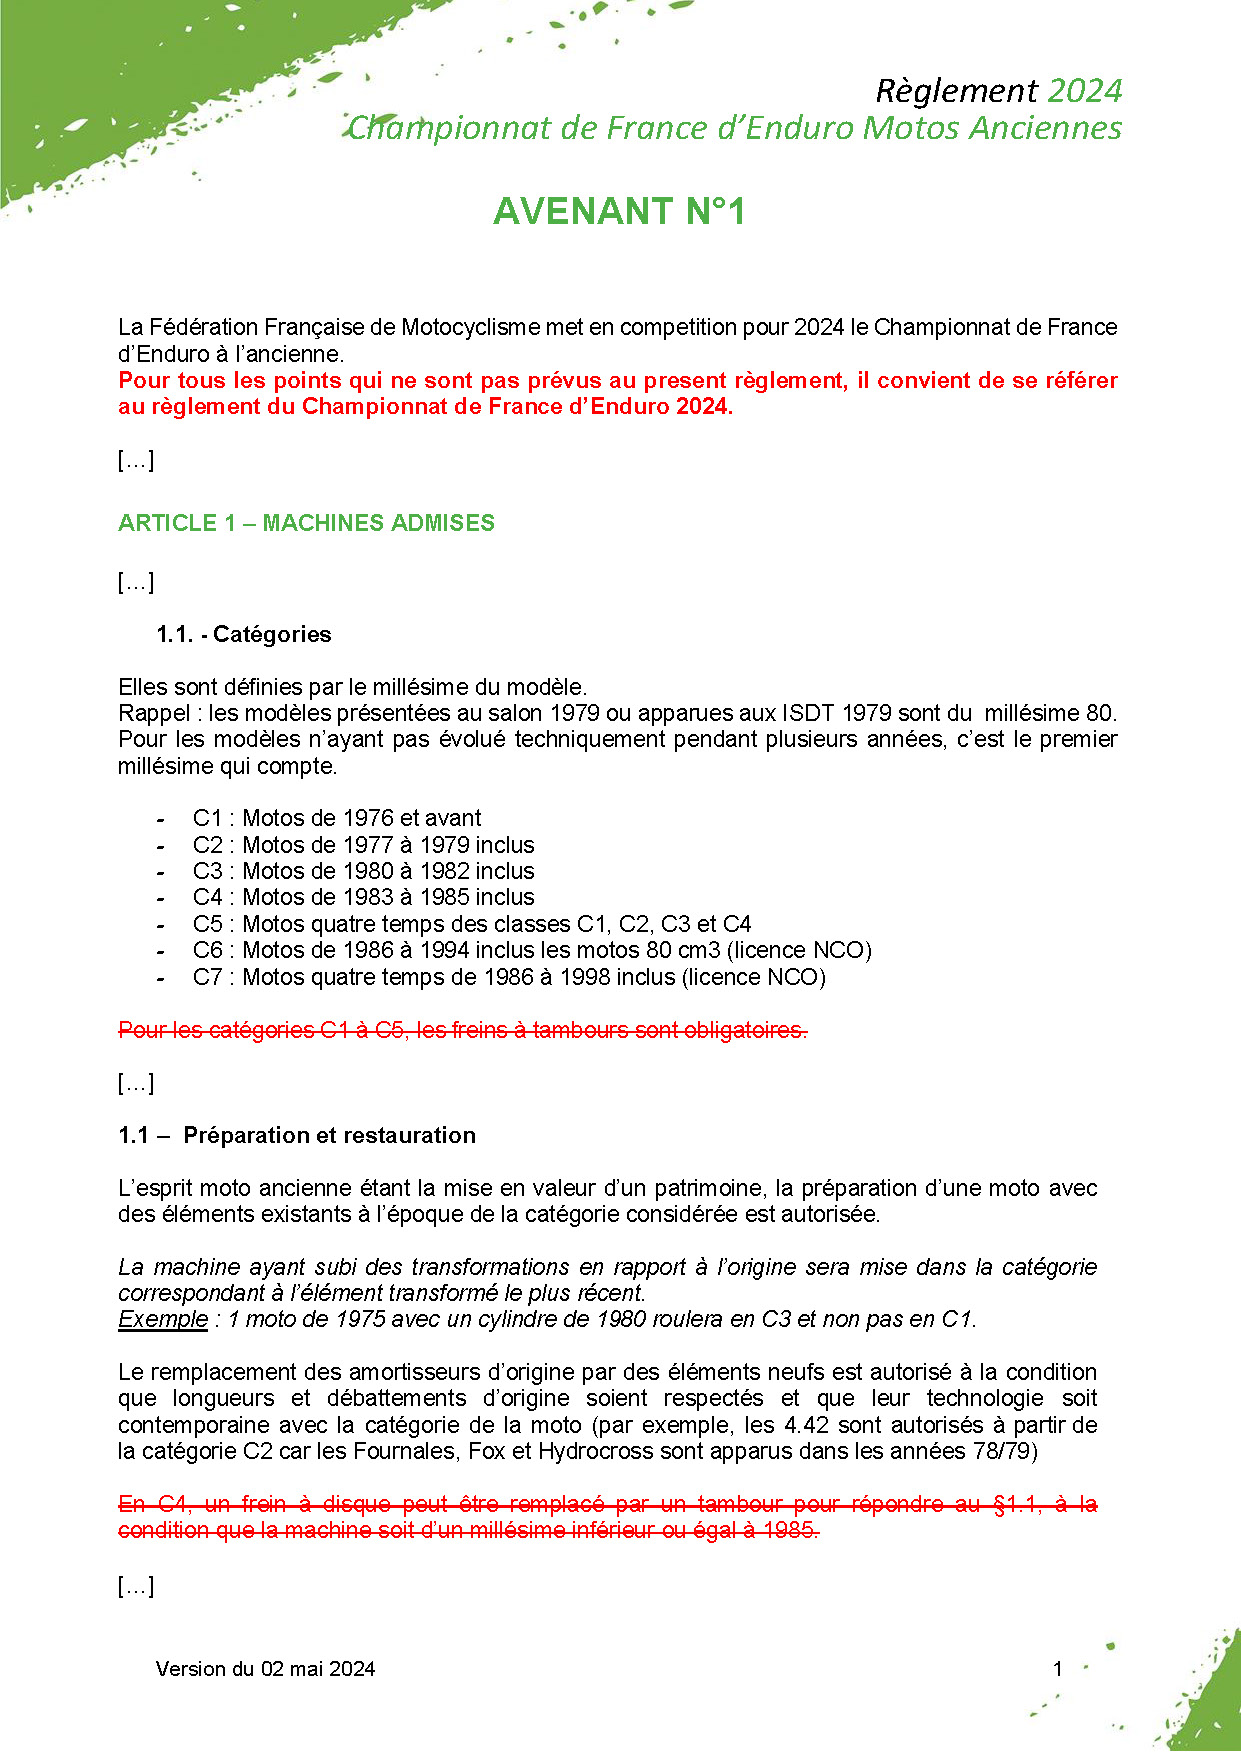 avenant-1-reglement-cf-enduro-a-lancienne-2024_Page_1.jpg